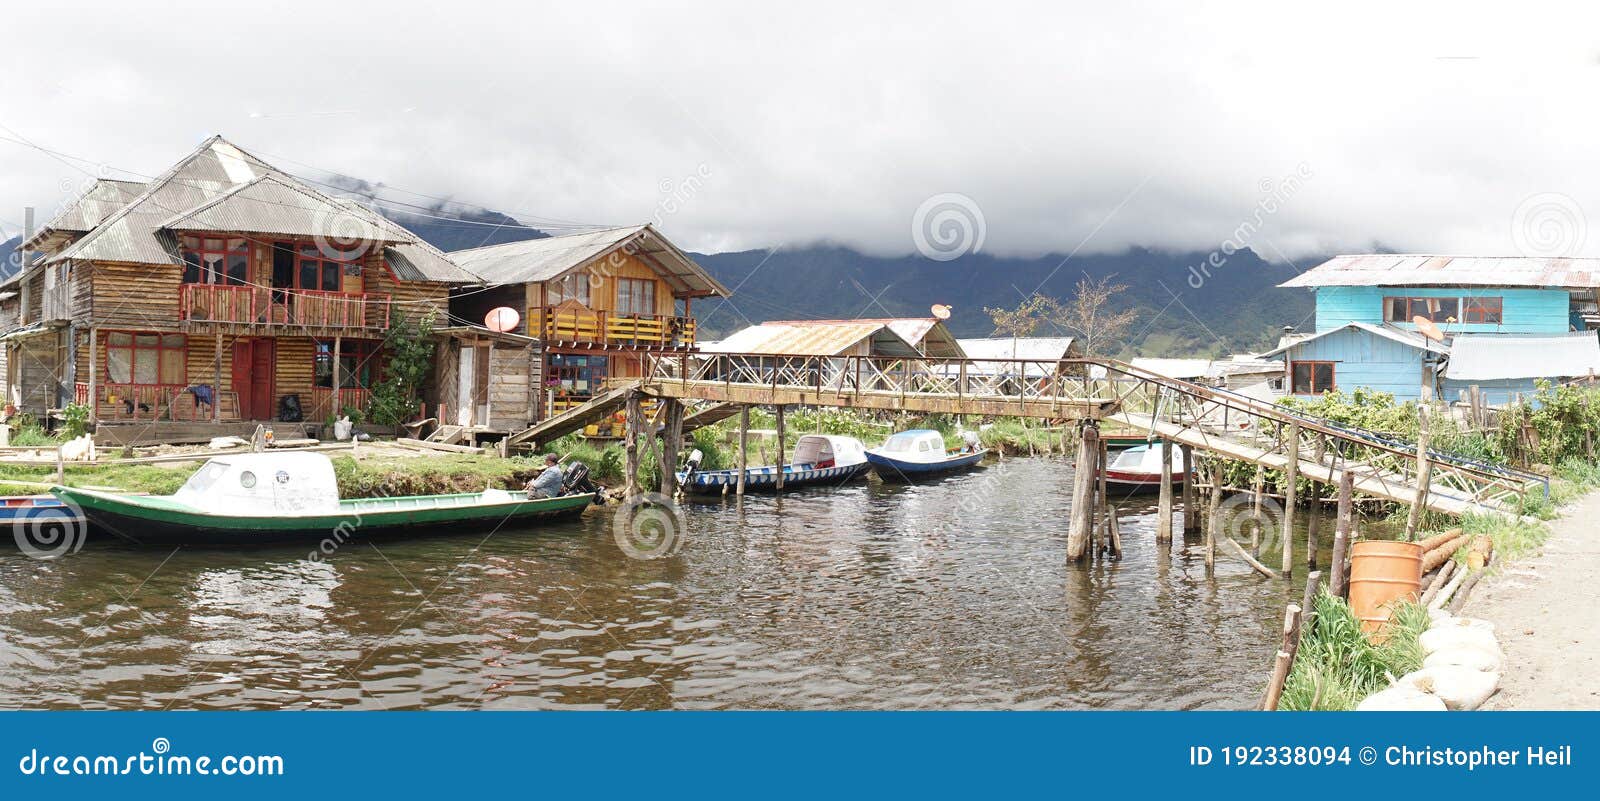 laguna de la cocha at el encano with wooden briges and stilt houses near pasto, colombia.